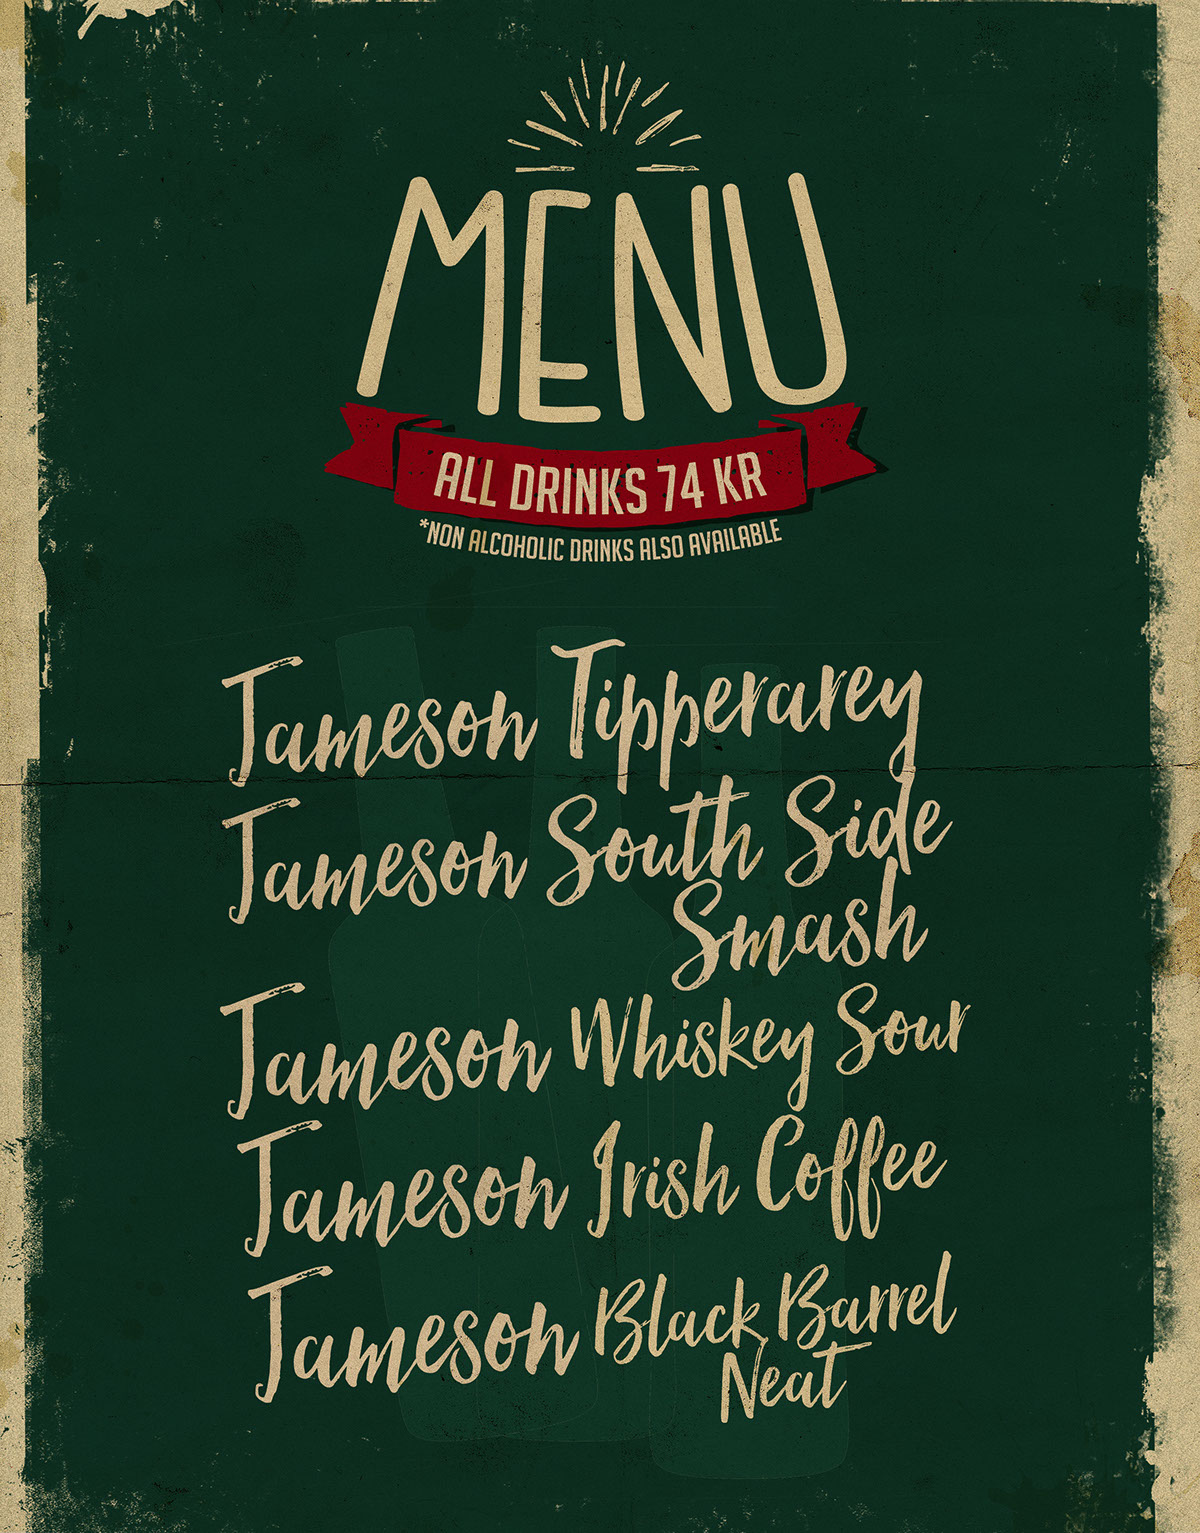 Jameson Irish Whiskey jazz uhørt jazzy james poster logo menu redwan belhadri oslo green